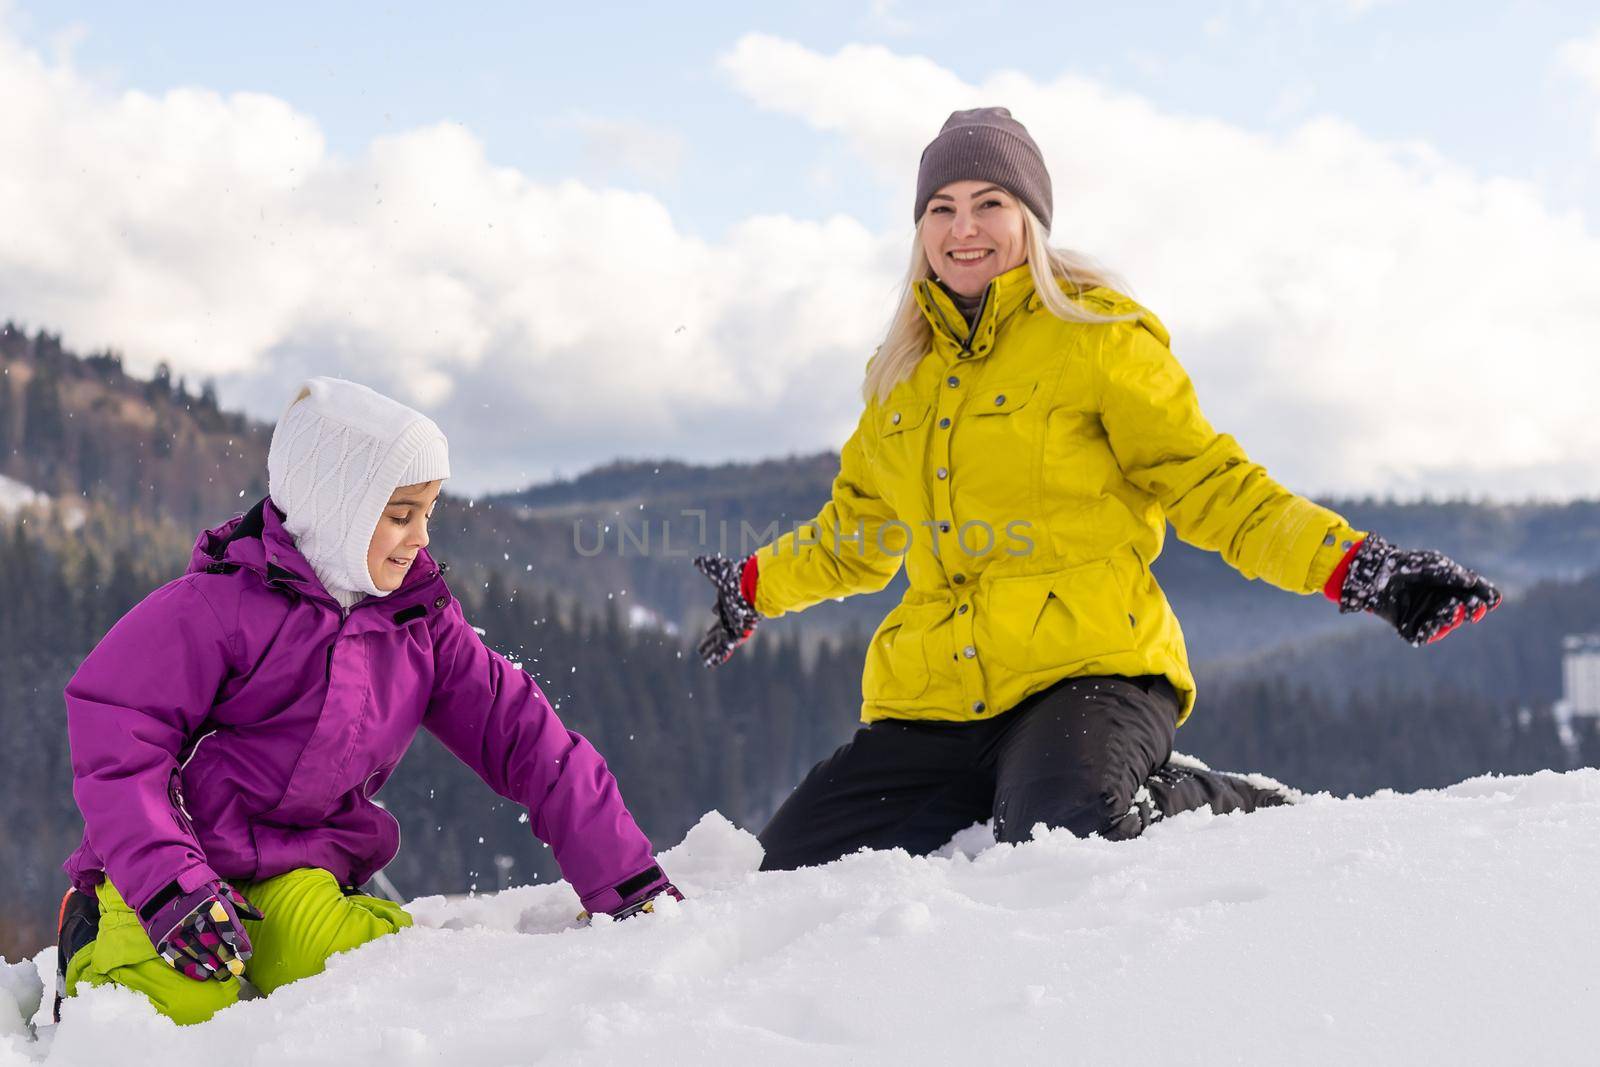 Winter,ski, snow and sun - family enjoying winter vacation by Andelov13